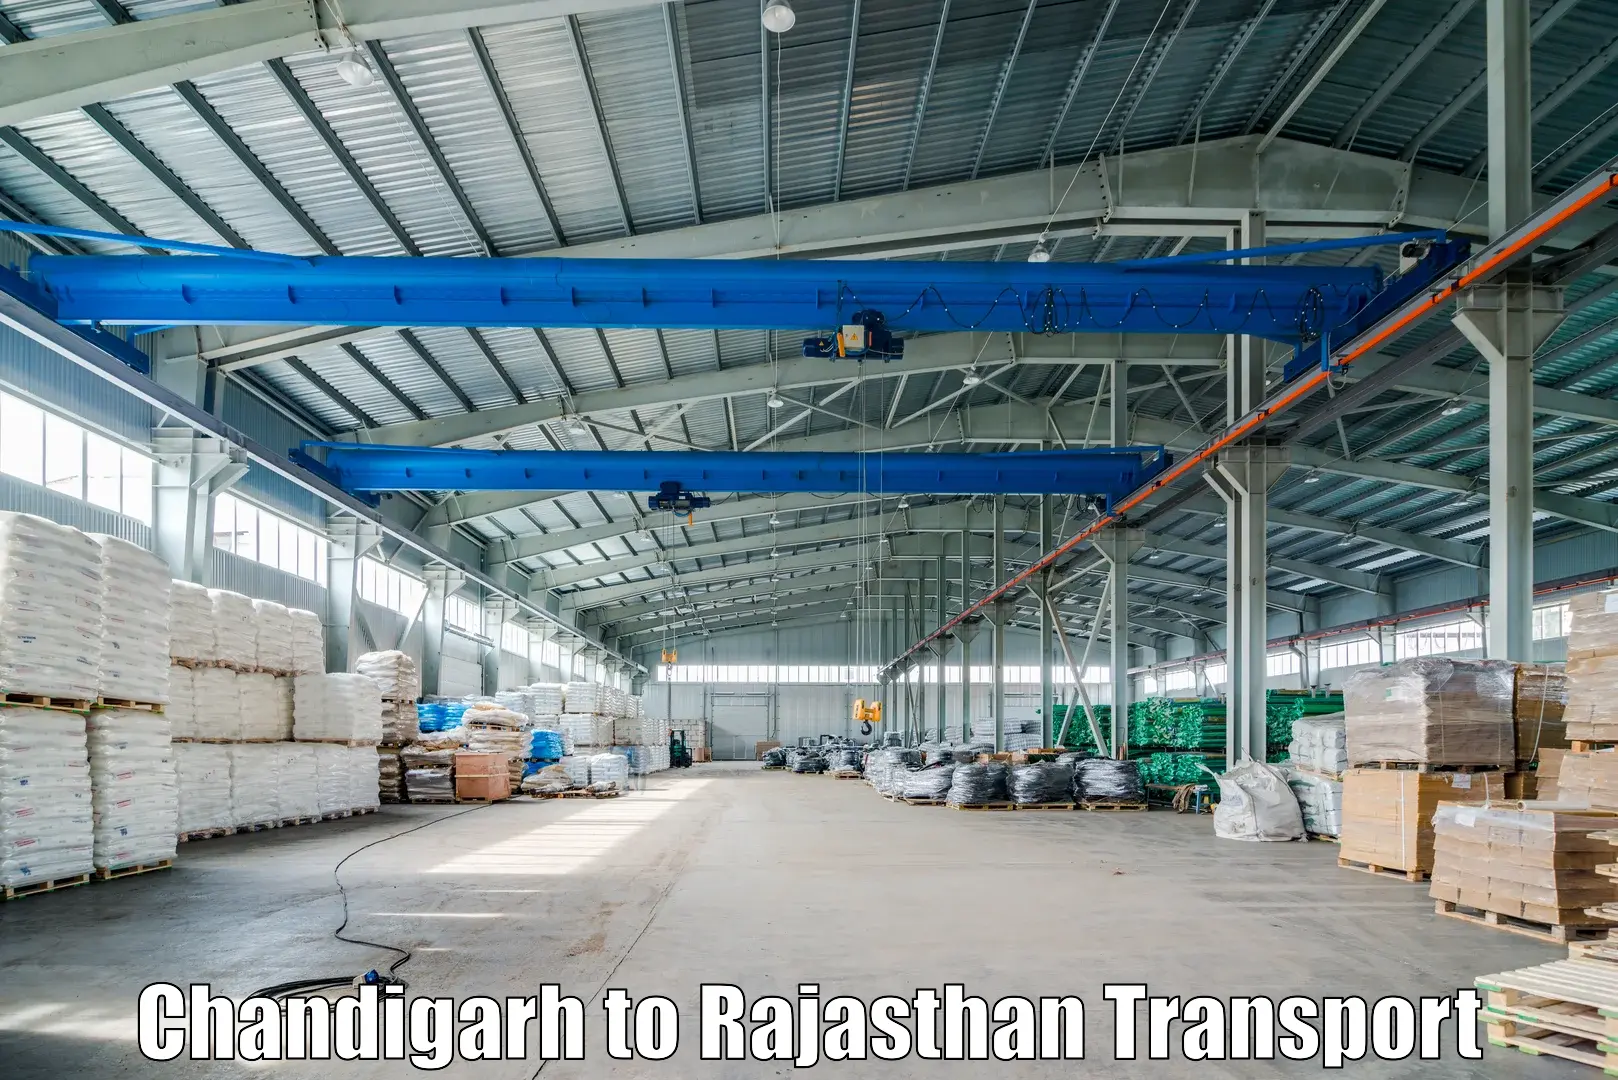 Daily transport service Chandigarh to Banswara